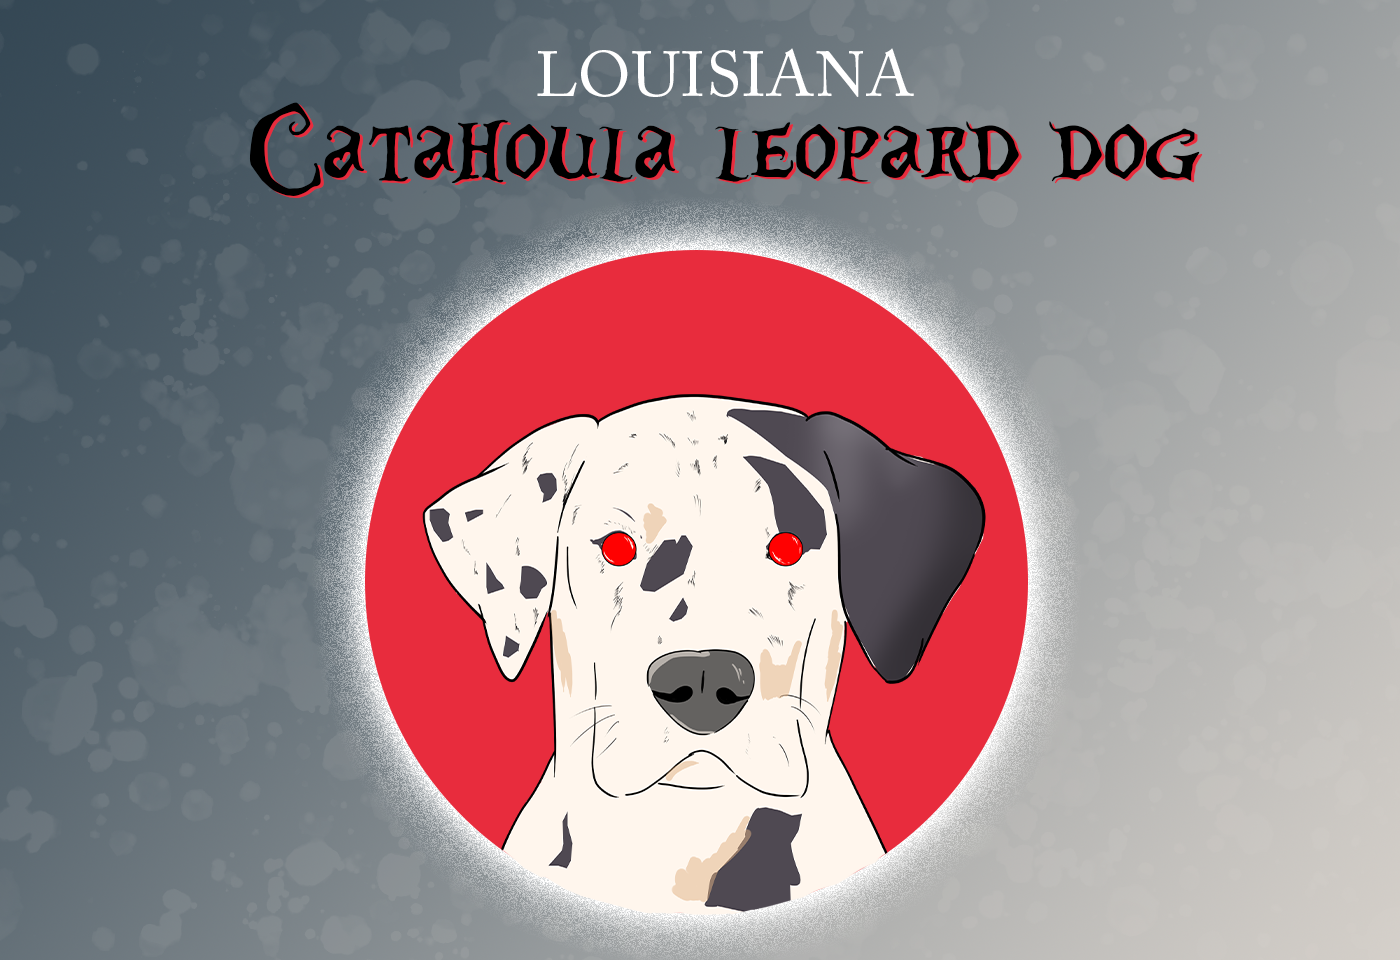 Catahoula Leopard Dog Louisiana State Dog